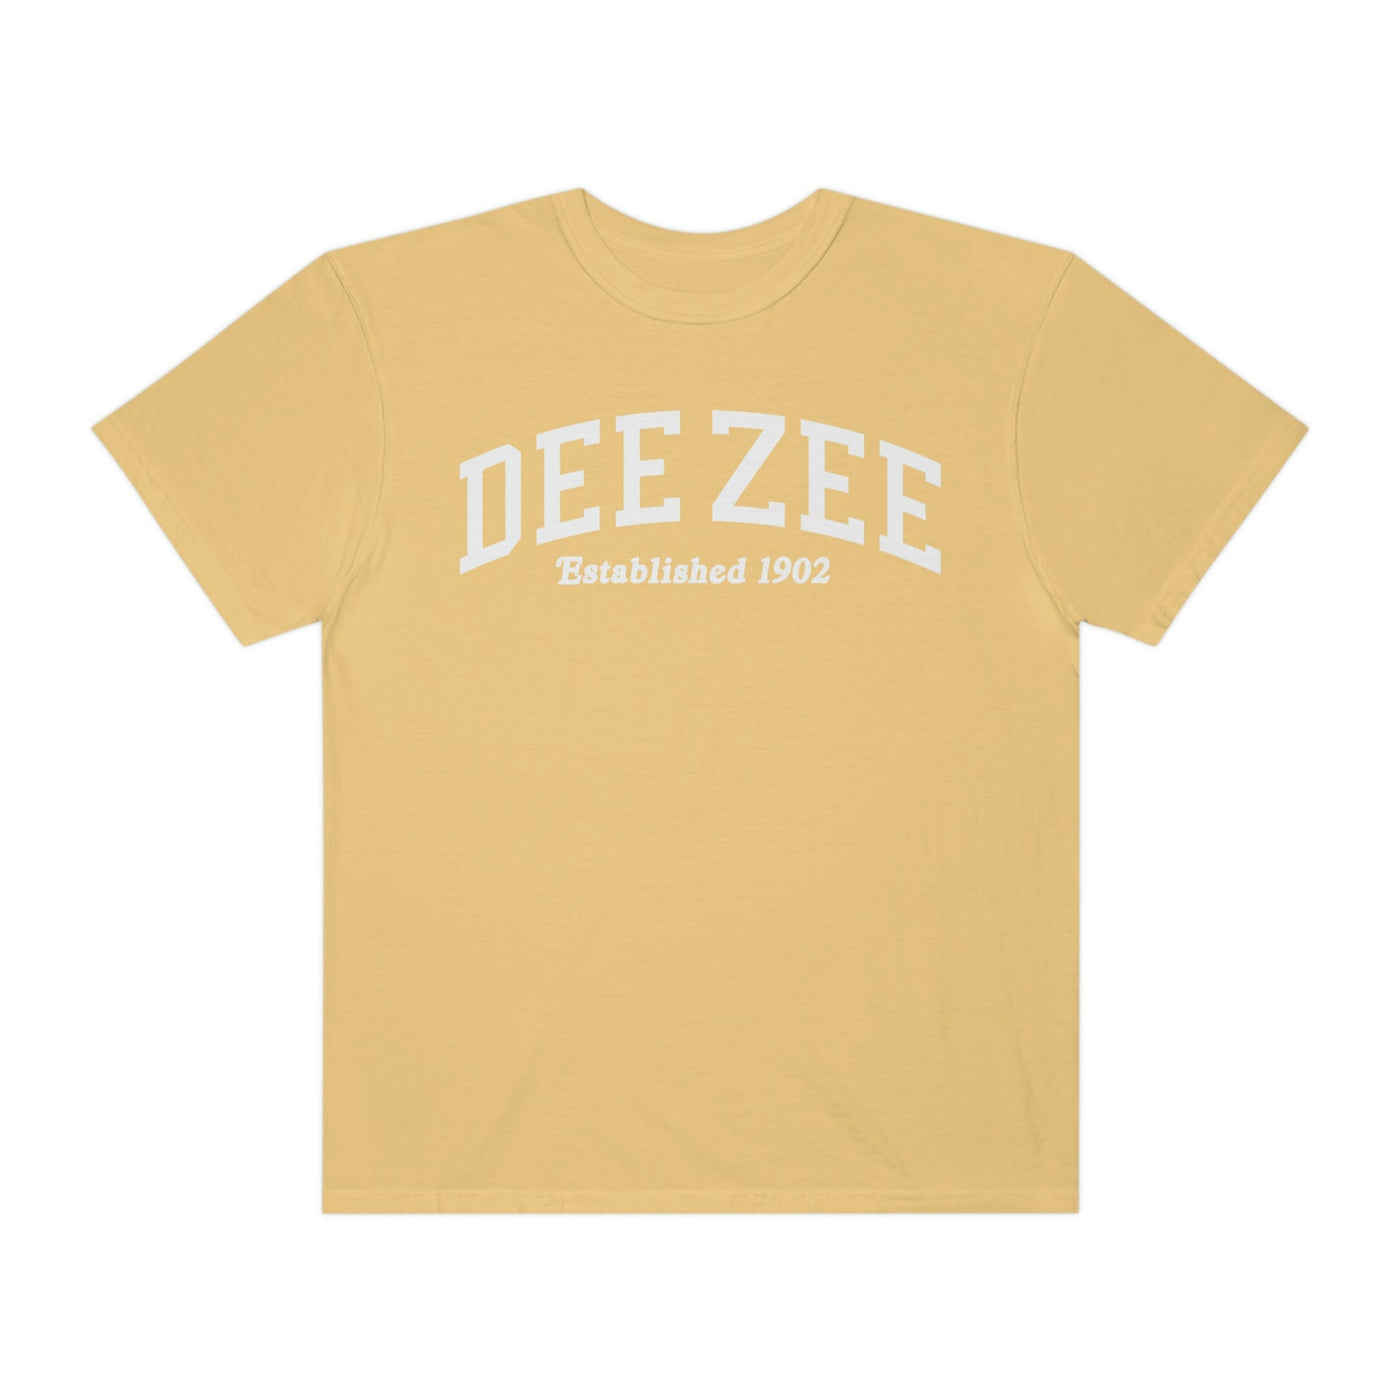 Delta Zeta Varsity College Sorority Comfy T-Shirt